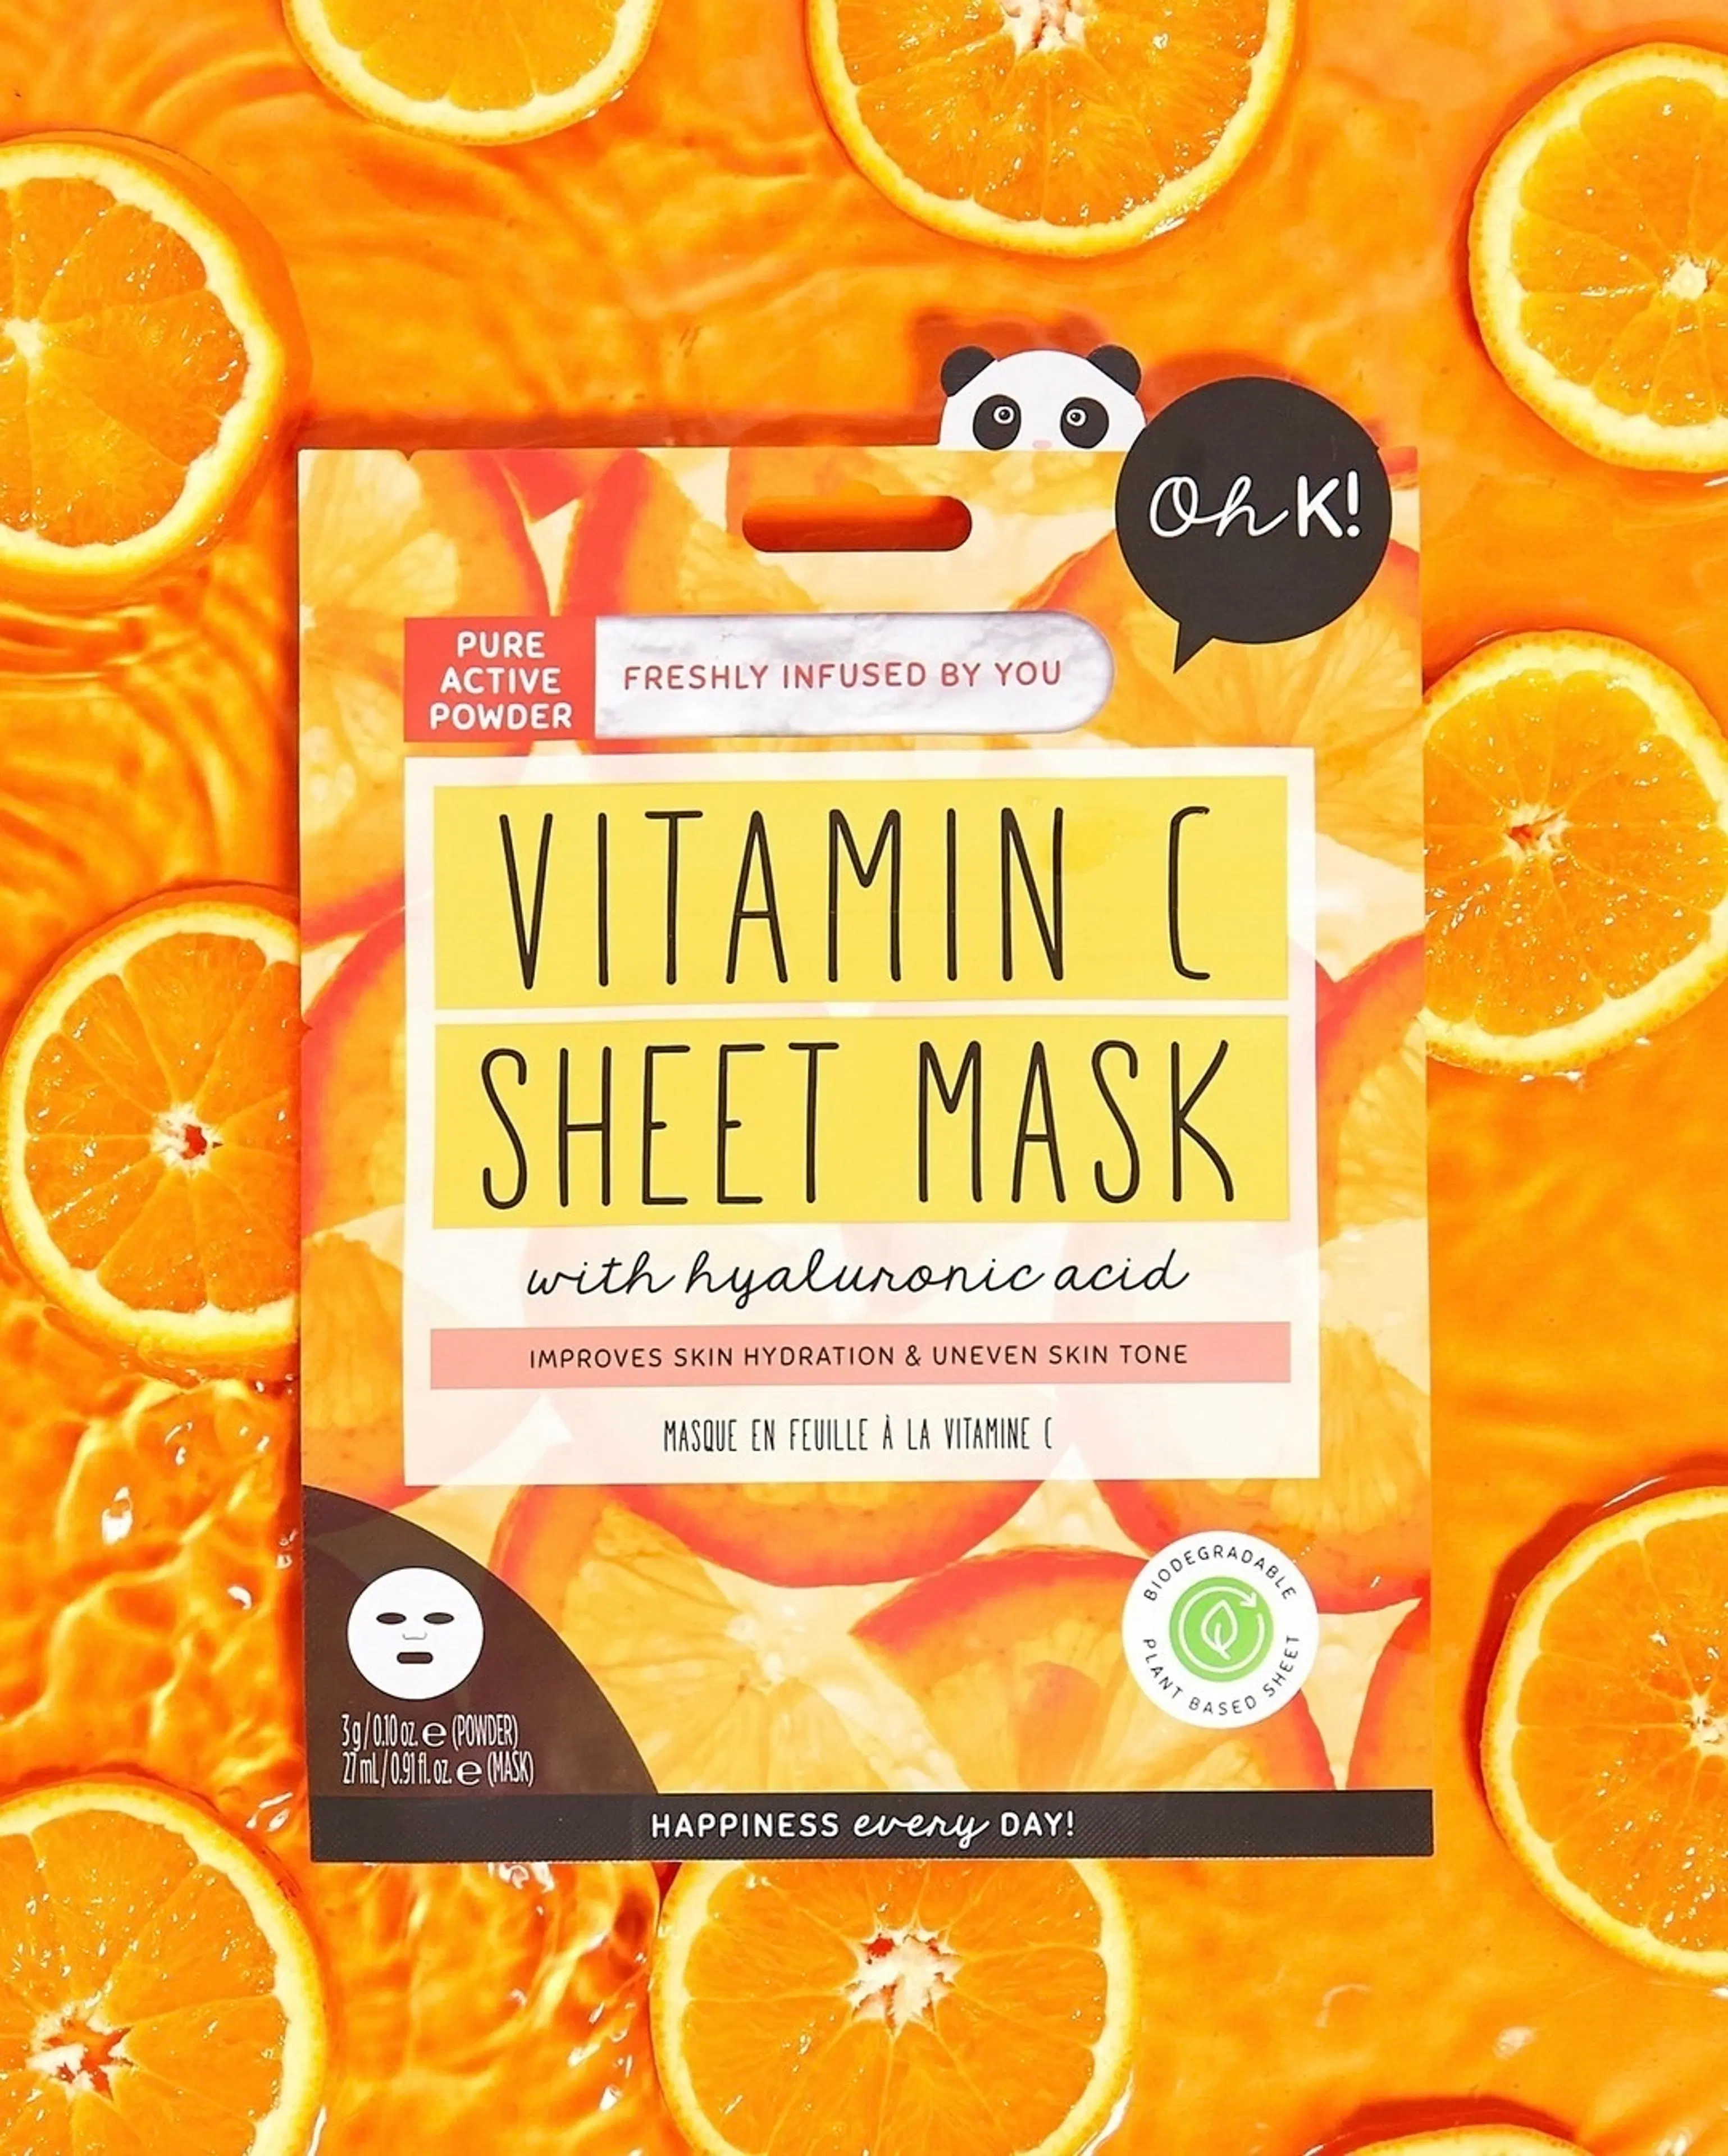 Oh K! Glowing Vitamin C Sheet Mask C-vitamiininaamio 27ml+3g